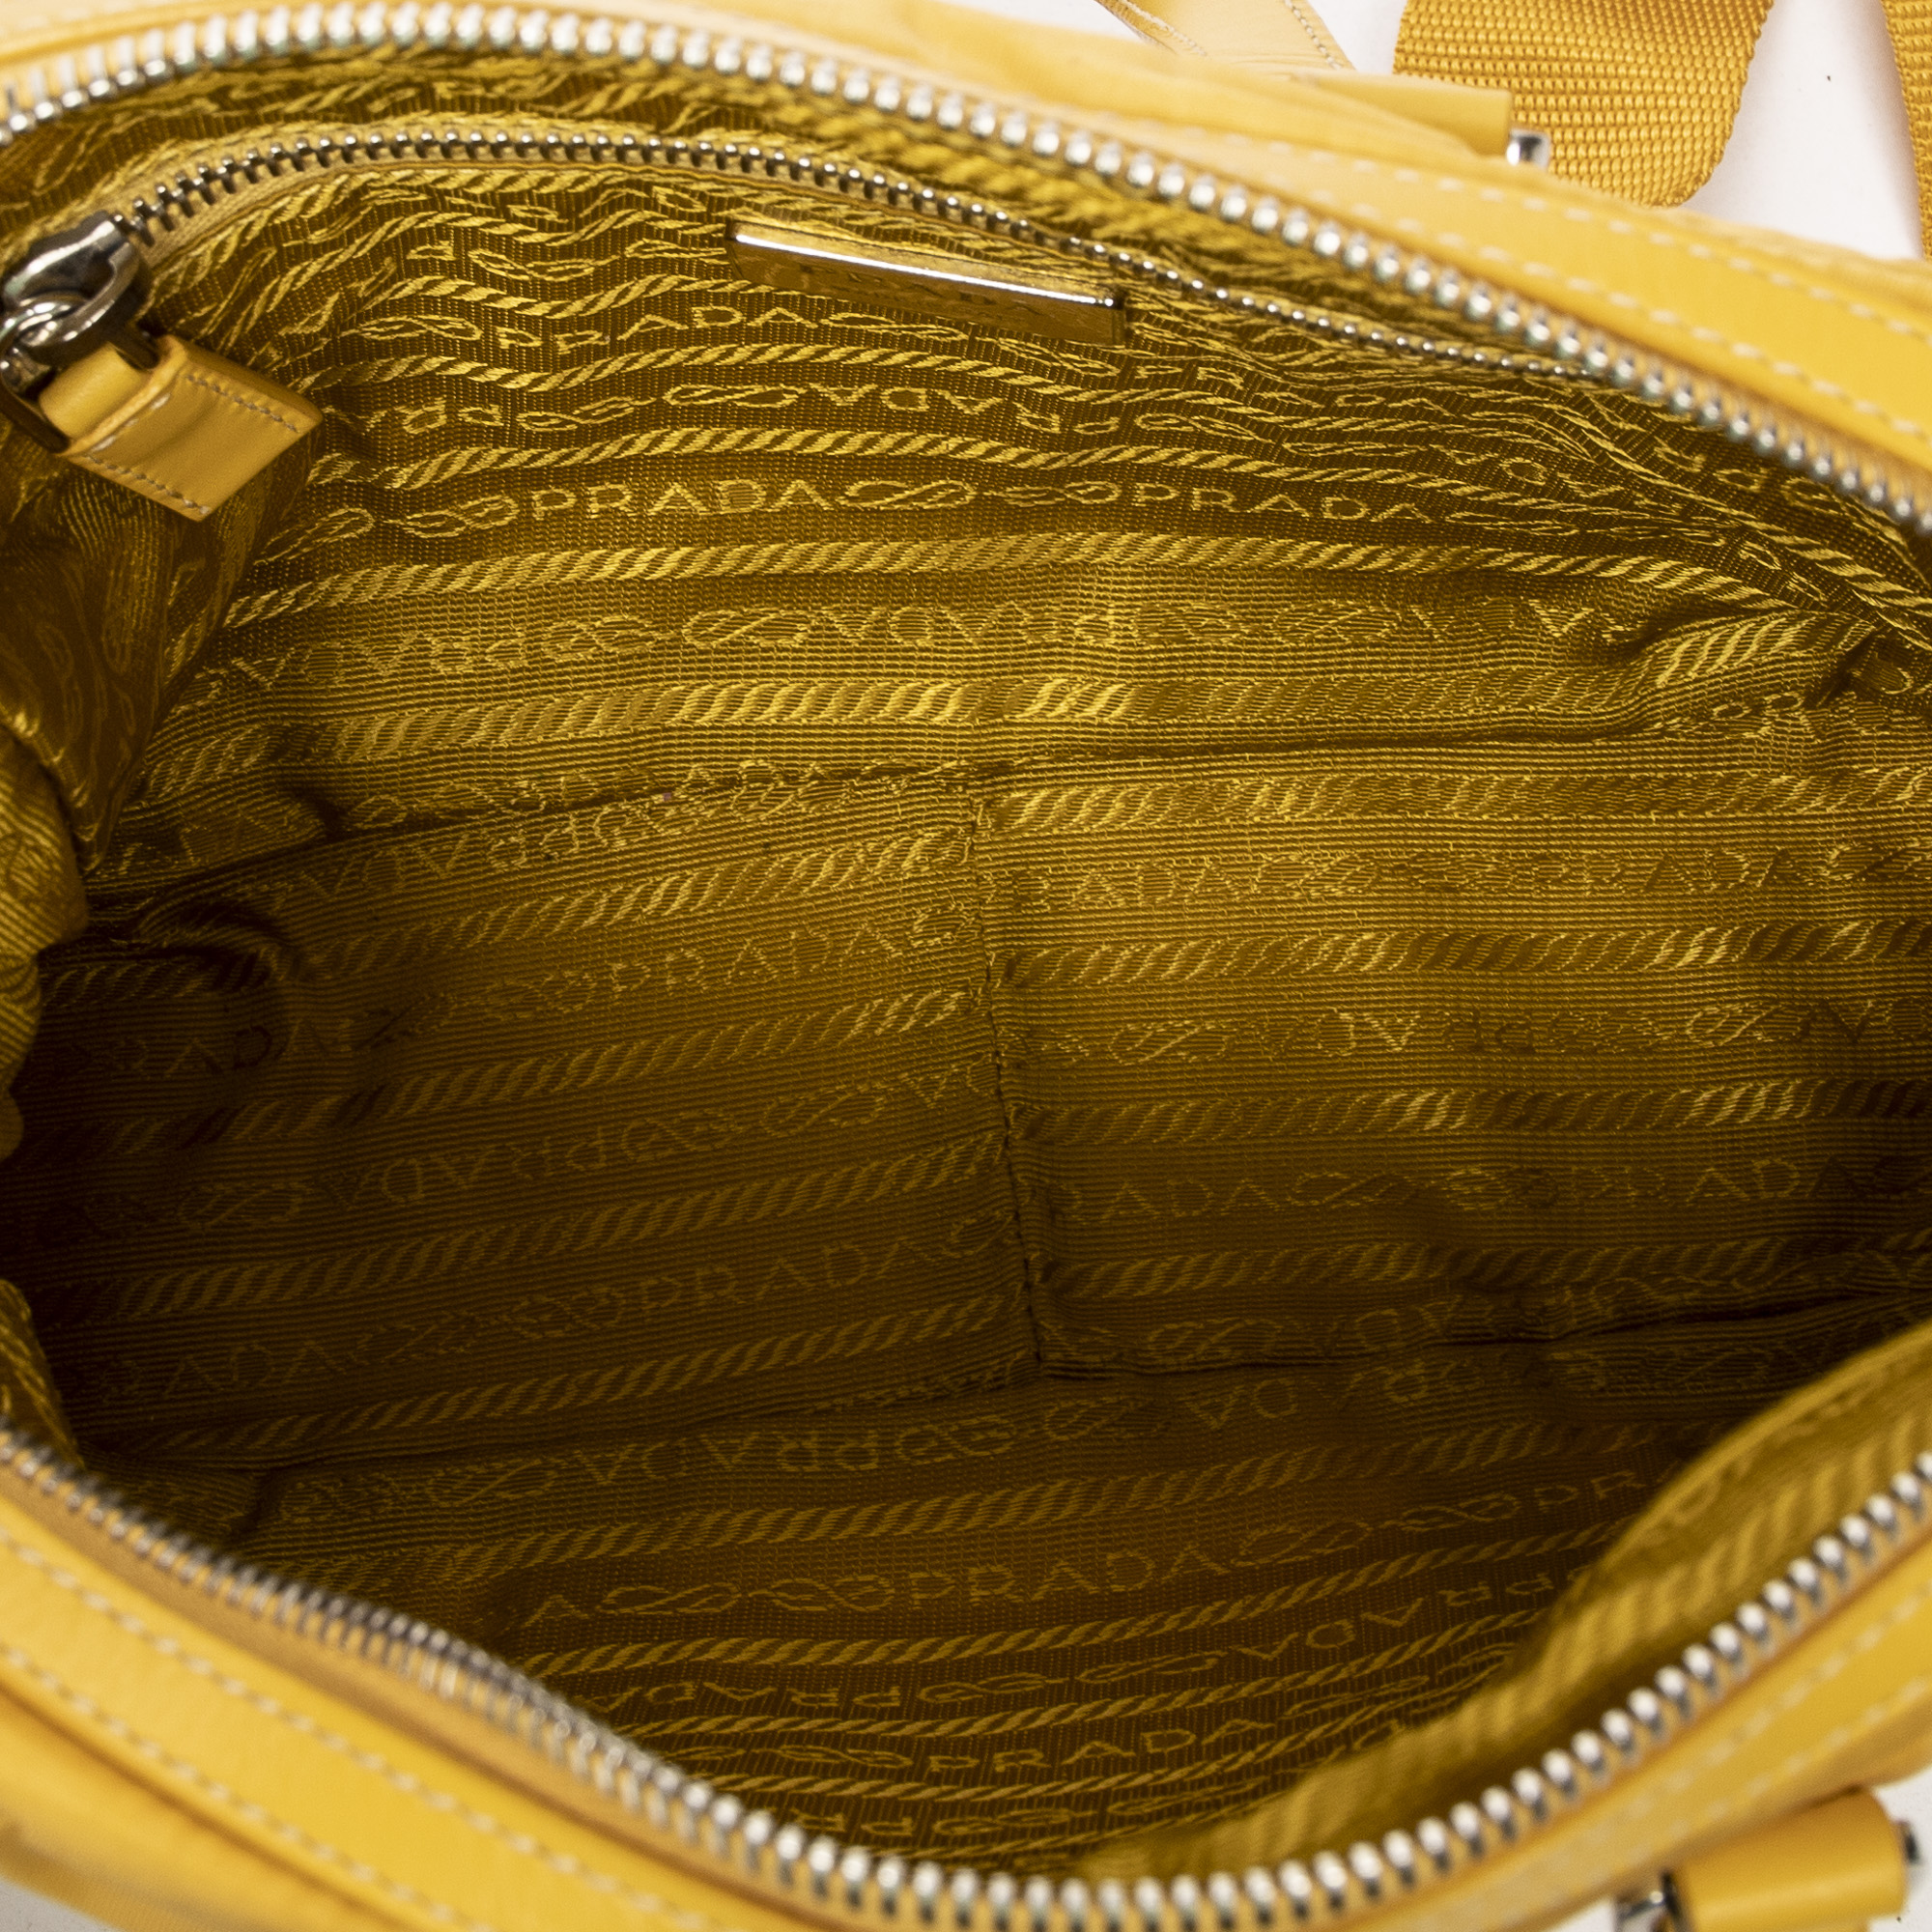 Prada Women's Re-Nylon Tote Bag - Yellow One-Size